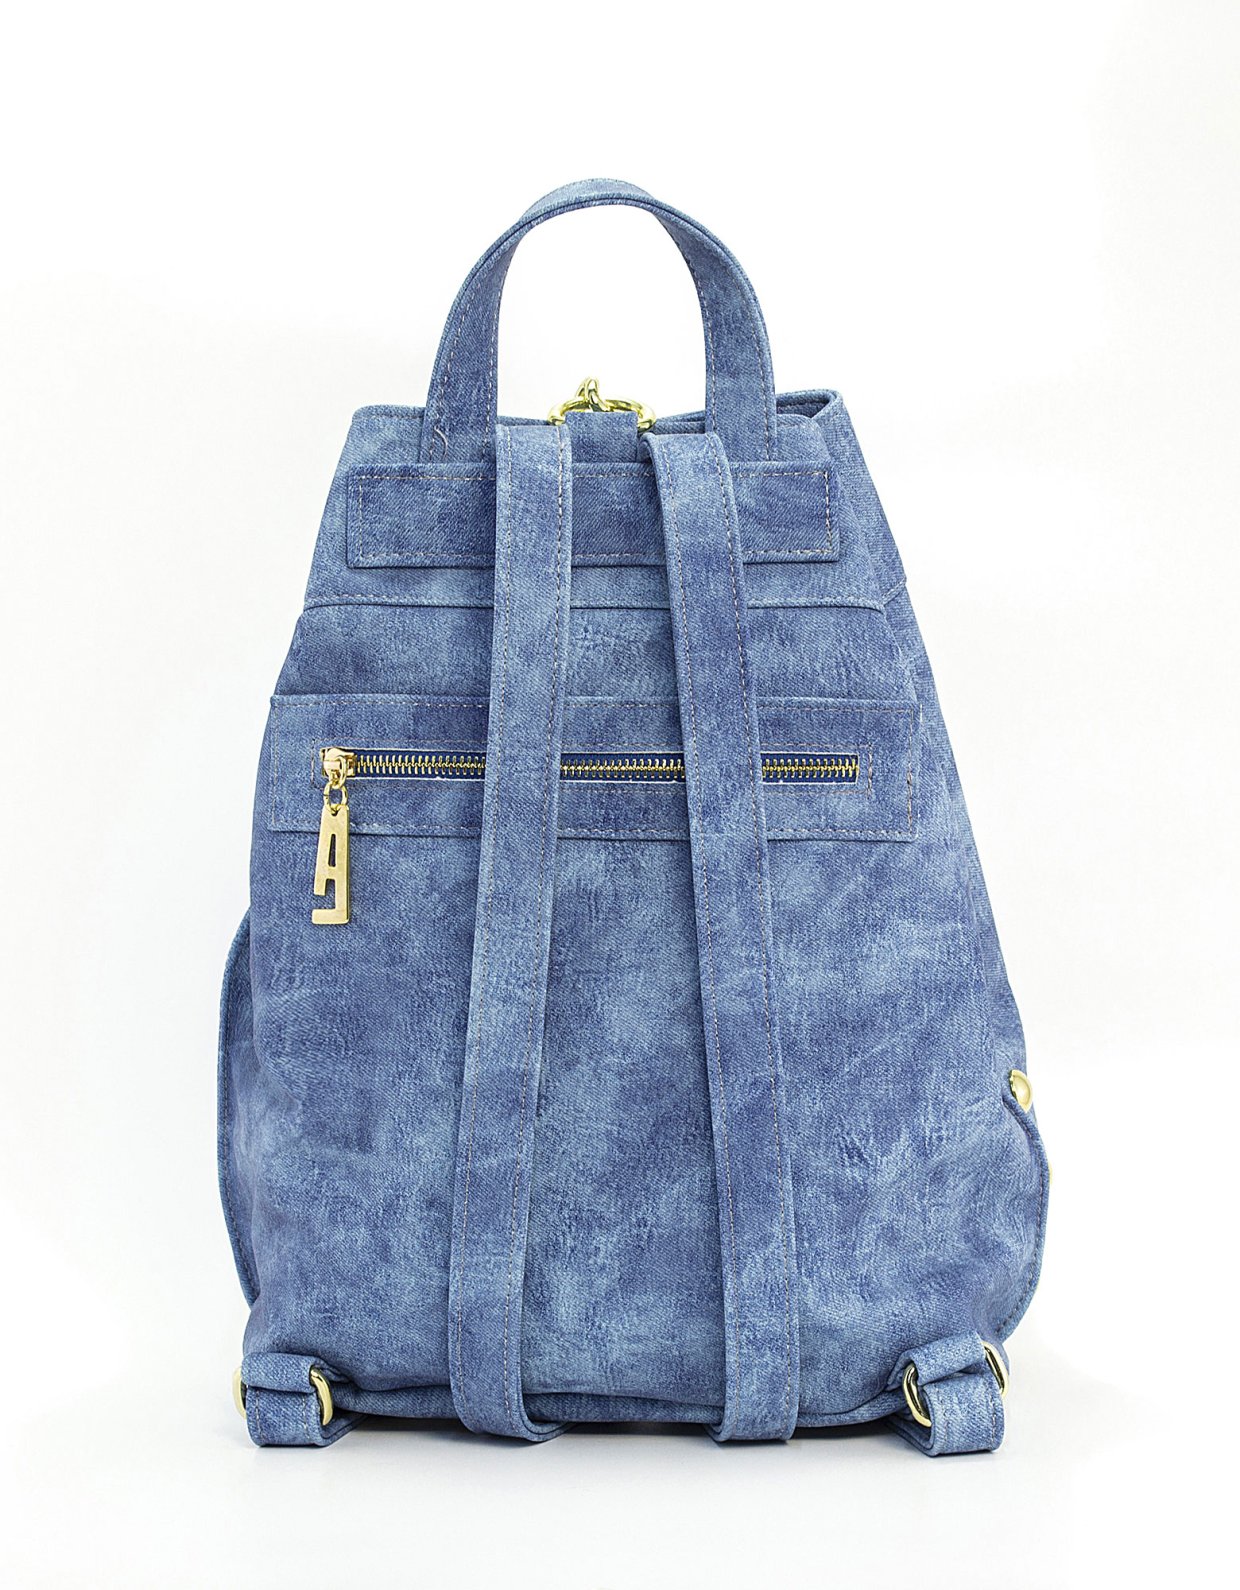 Elena Athanasiou Backpack jean pattern blue gold